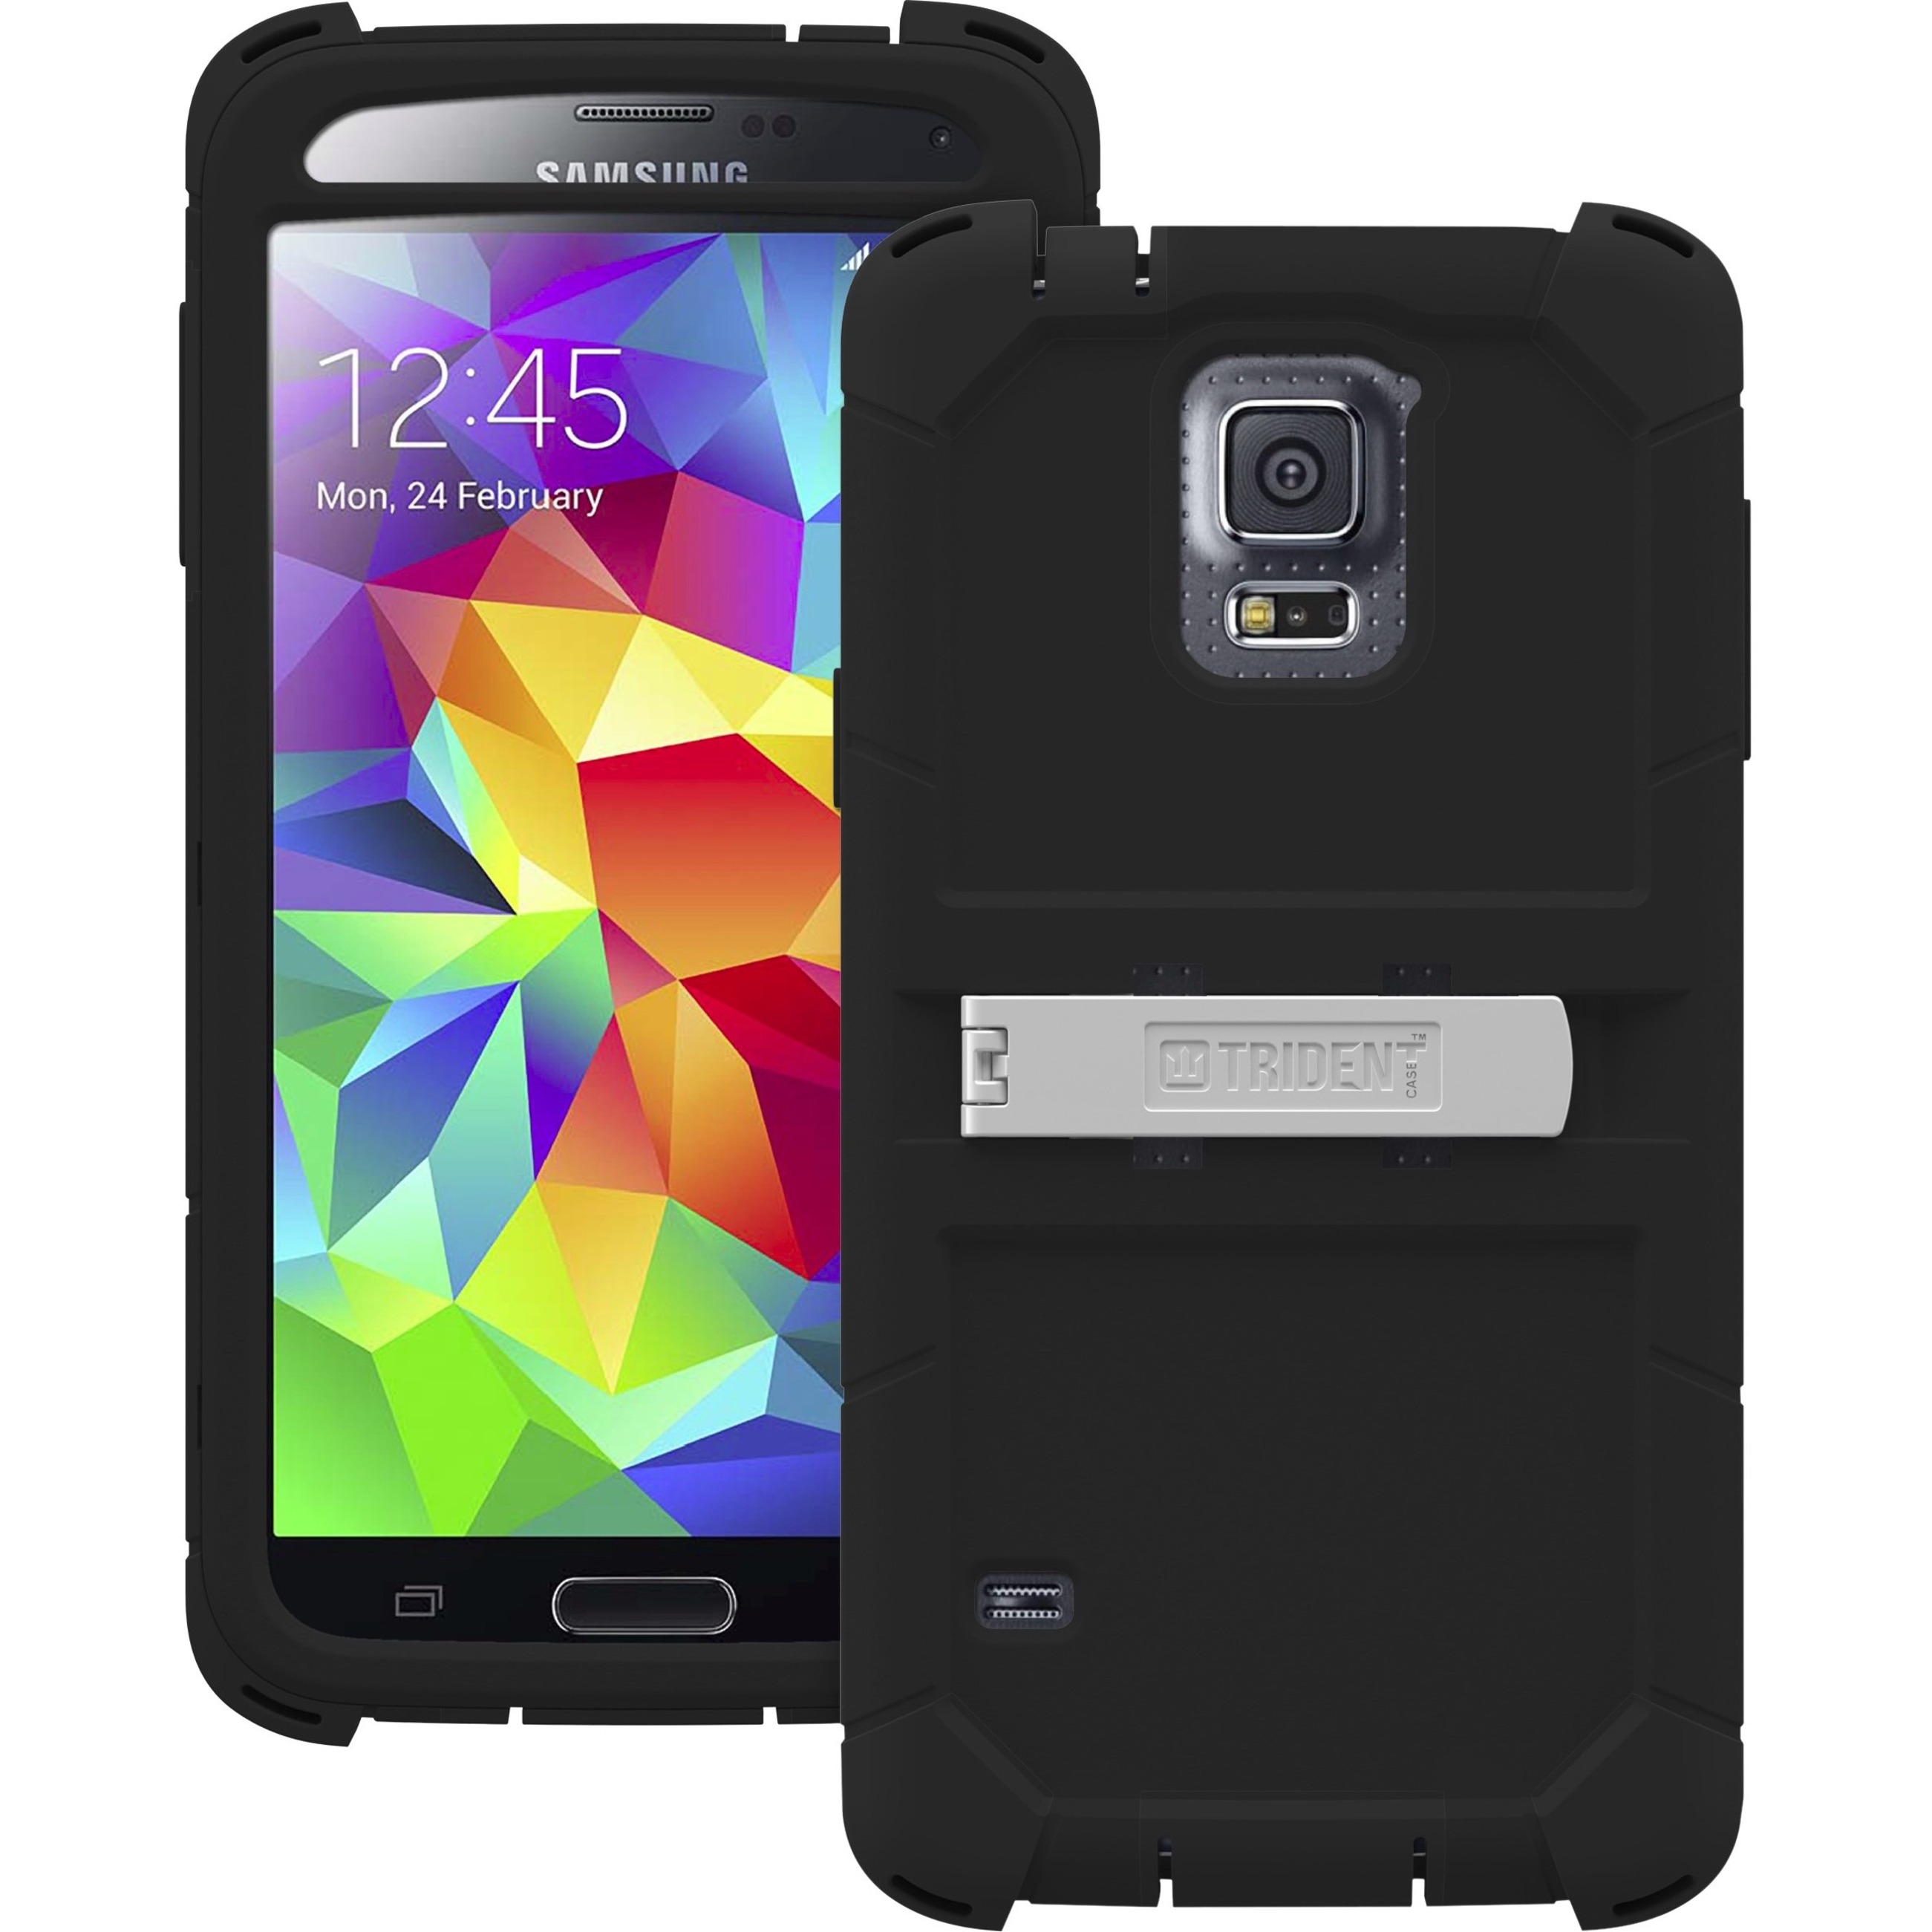 Trident Kraken AMS Carrying Case Rugged (Holster) Smartphone, Black - image 1 of 6